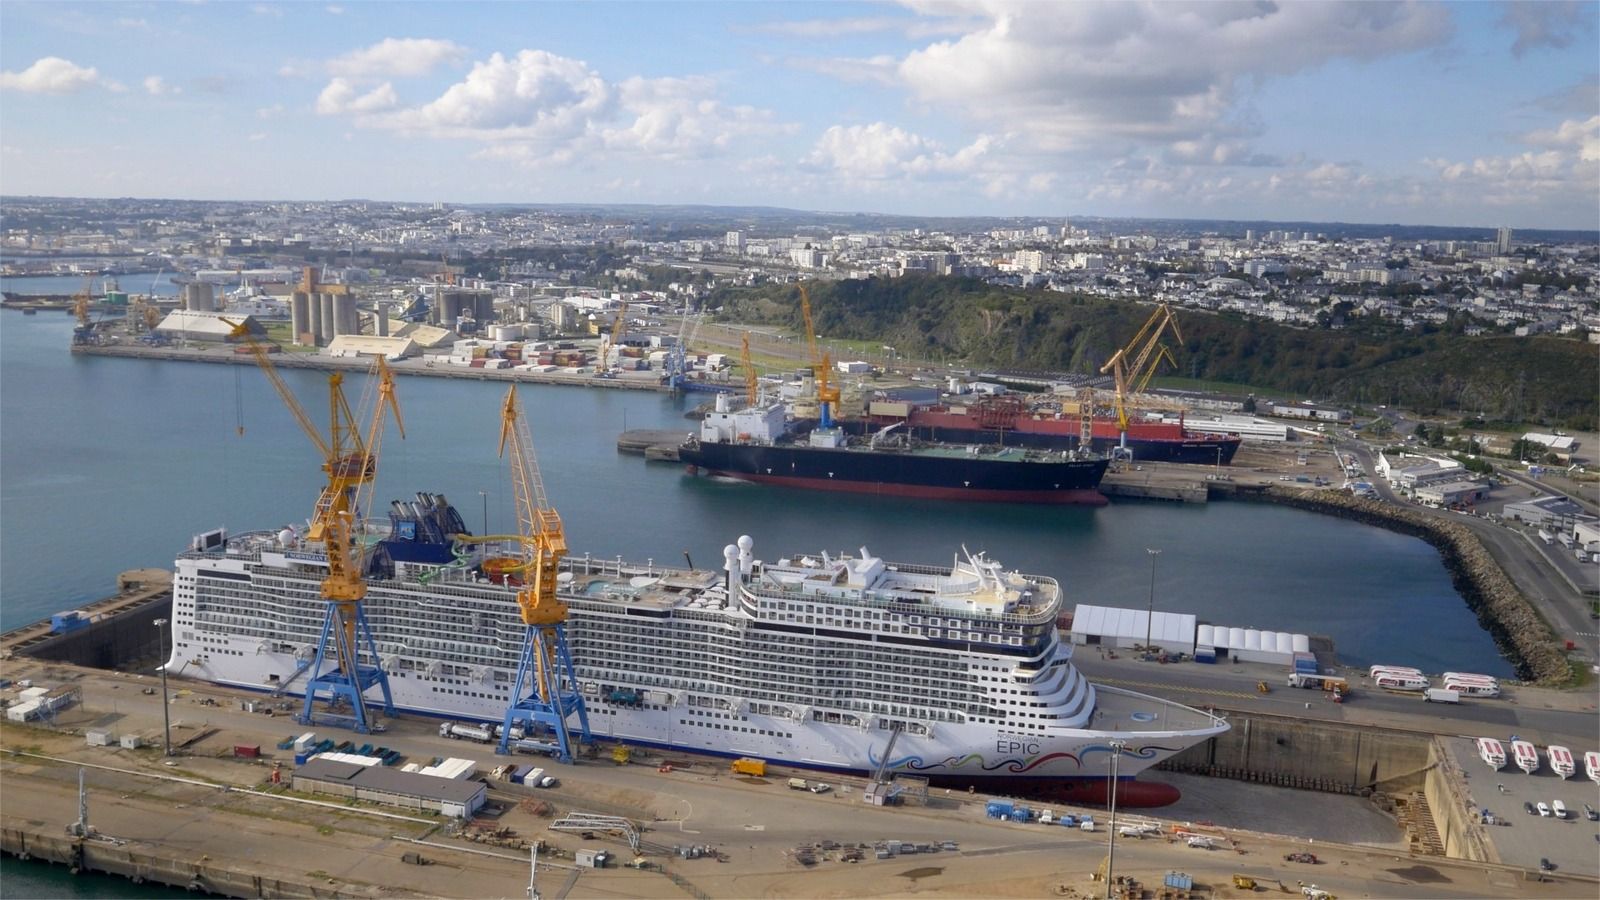 Norwegian Epic departs Damen Shiprepair Brestahead of schedule - MarinePoland.com